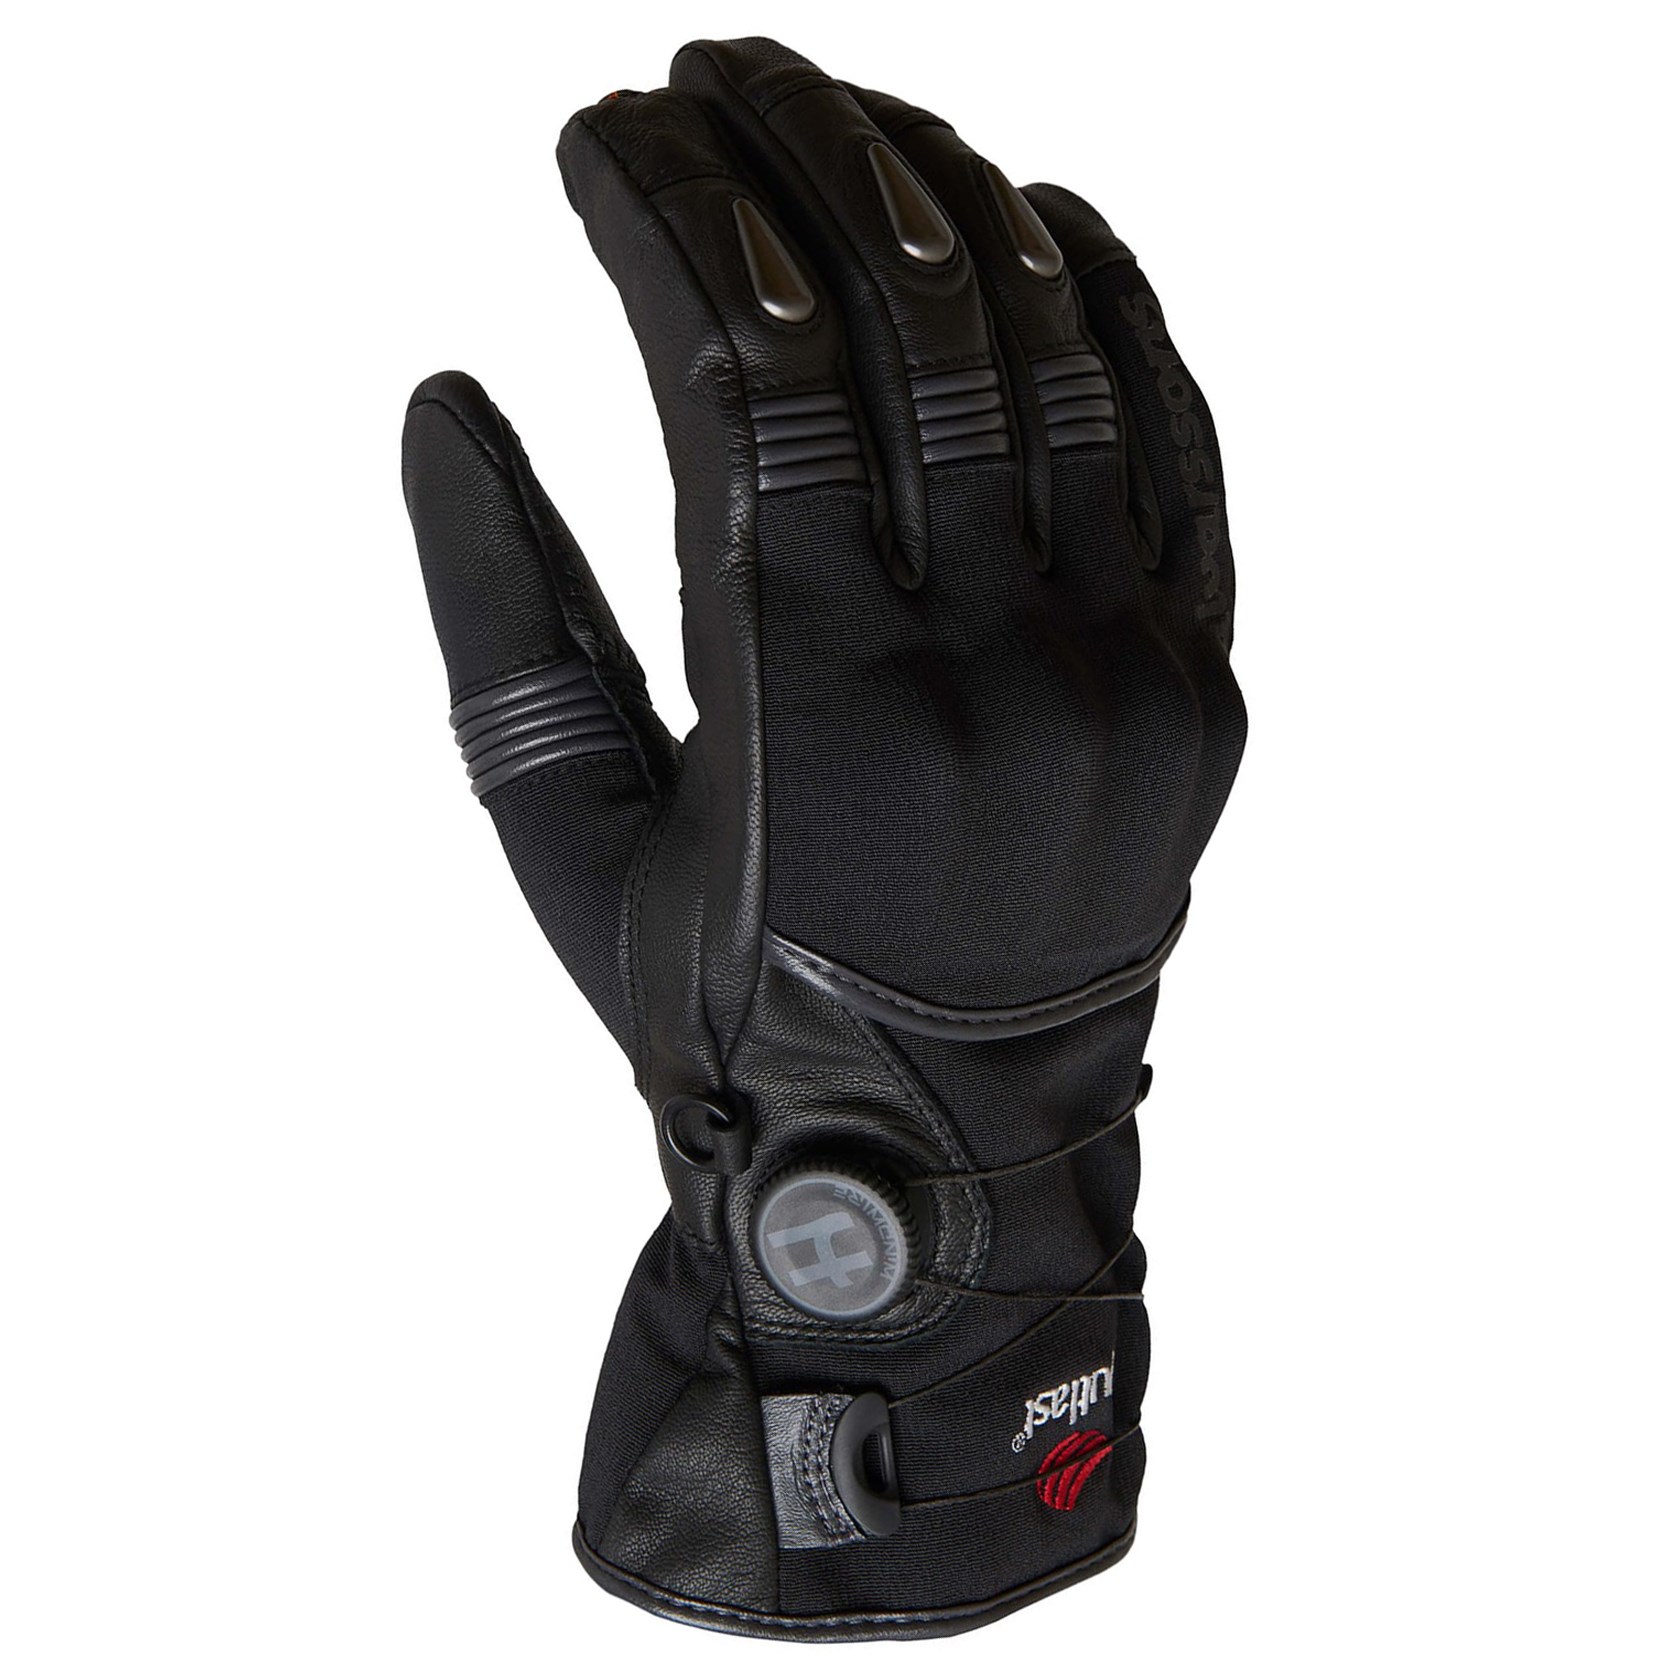 Halvarssons gloves in black